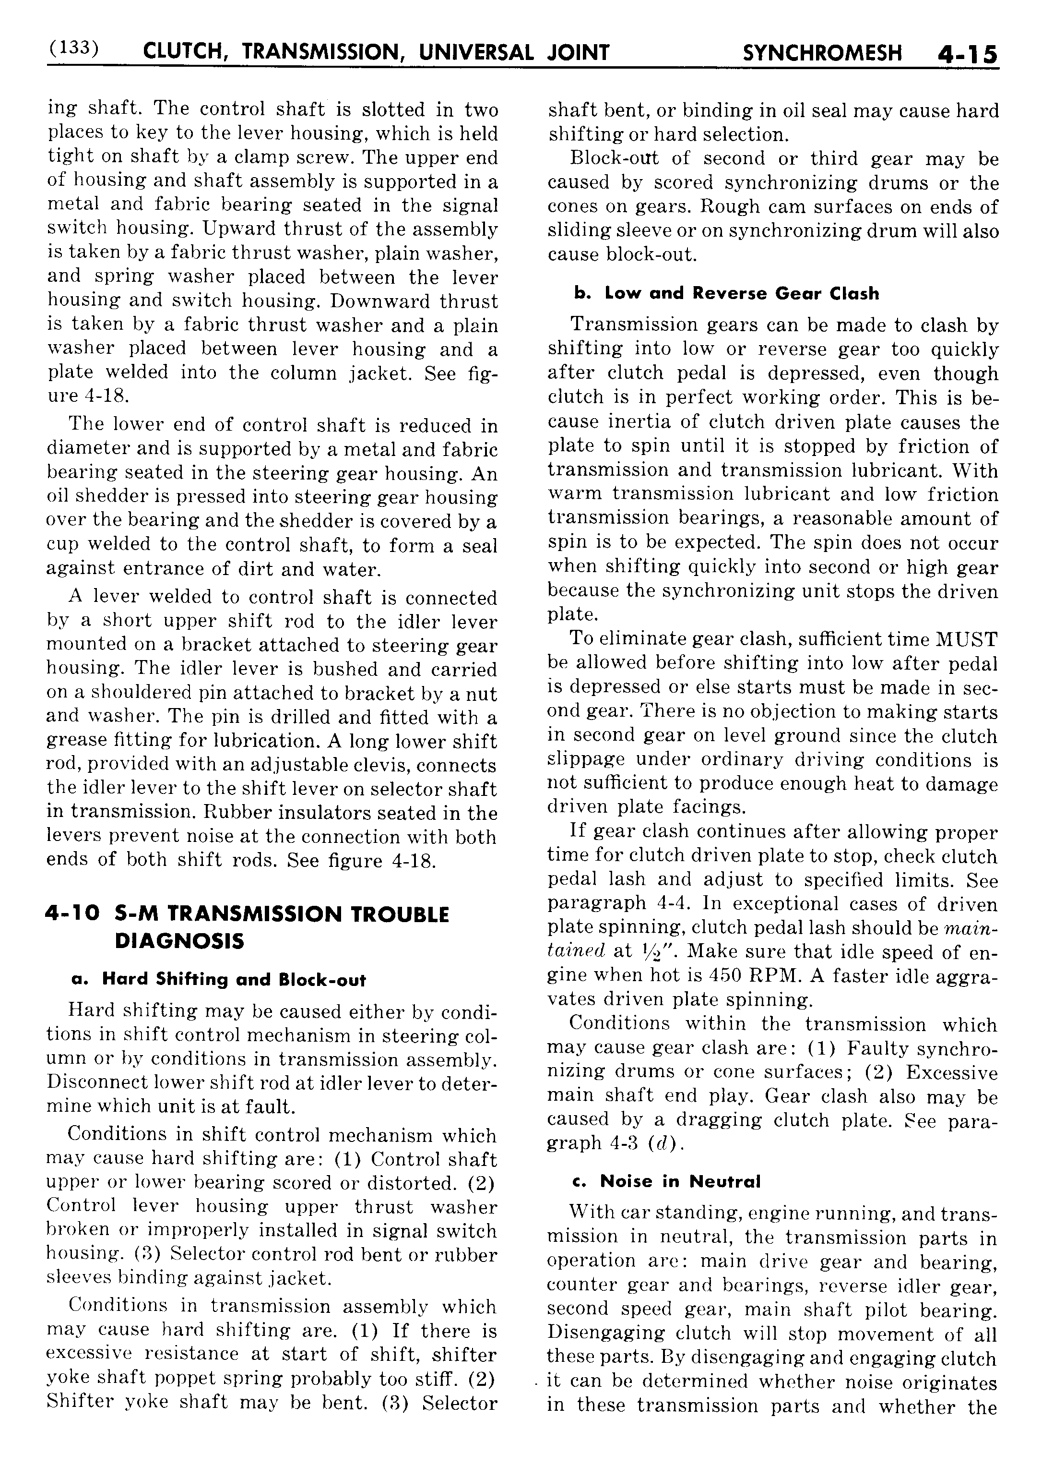 n_05 1951 Buick Shop Manual - Transmission-015-015.jpg